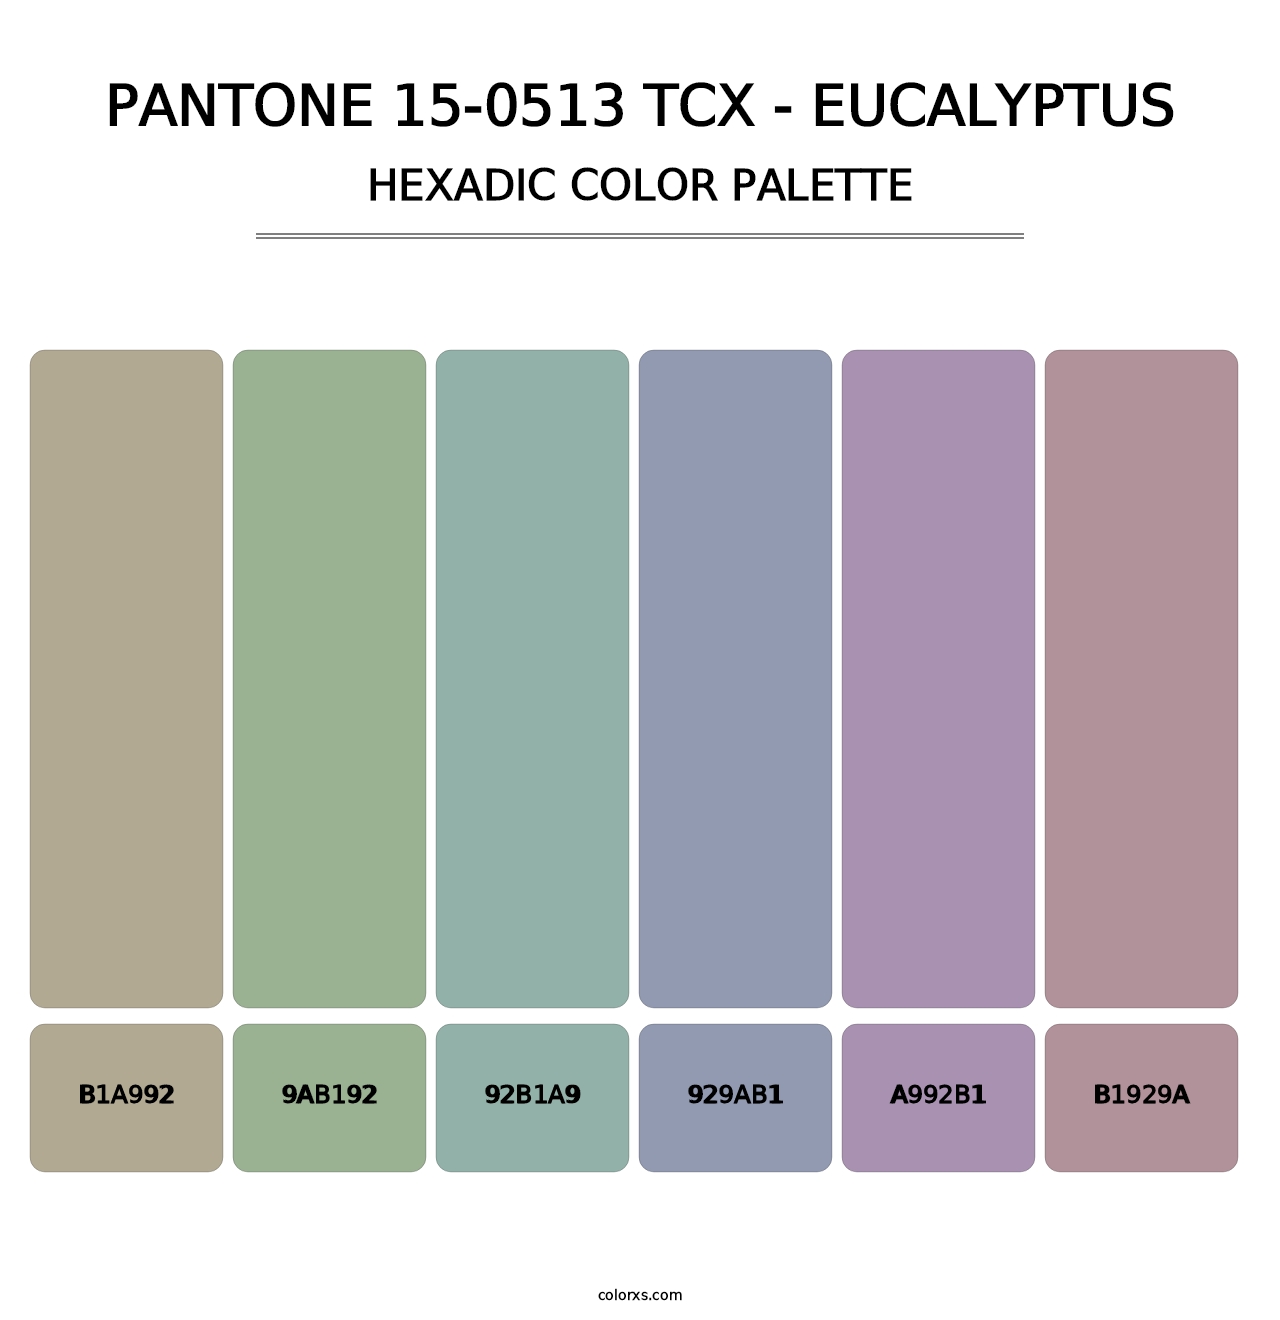 PANTONE 15-0513 TCX - Eucalyptus - Hexadic Color Palette